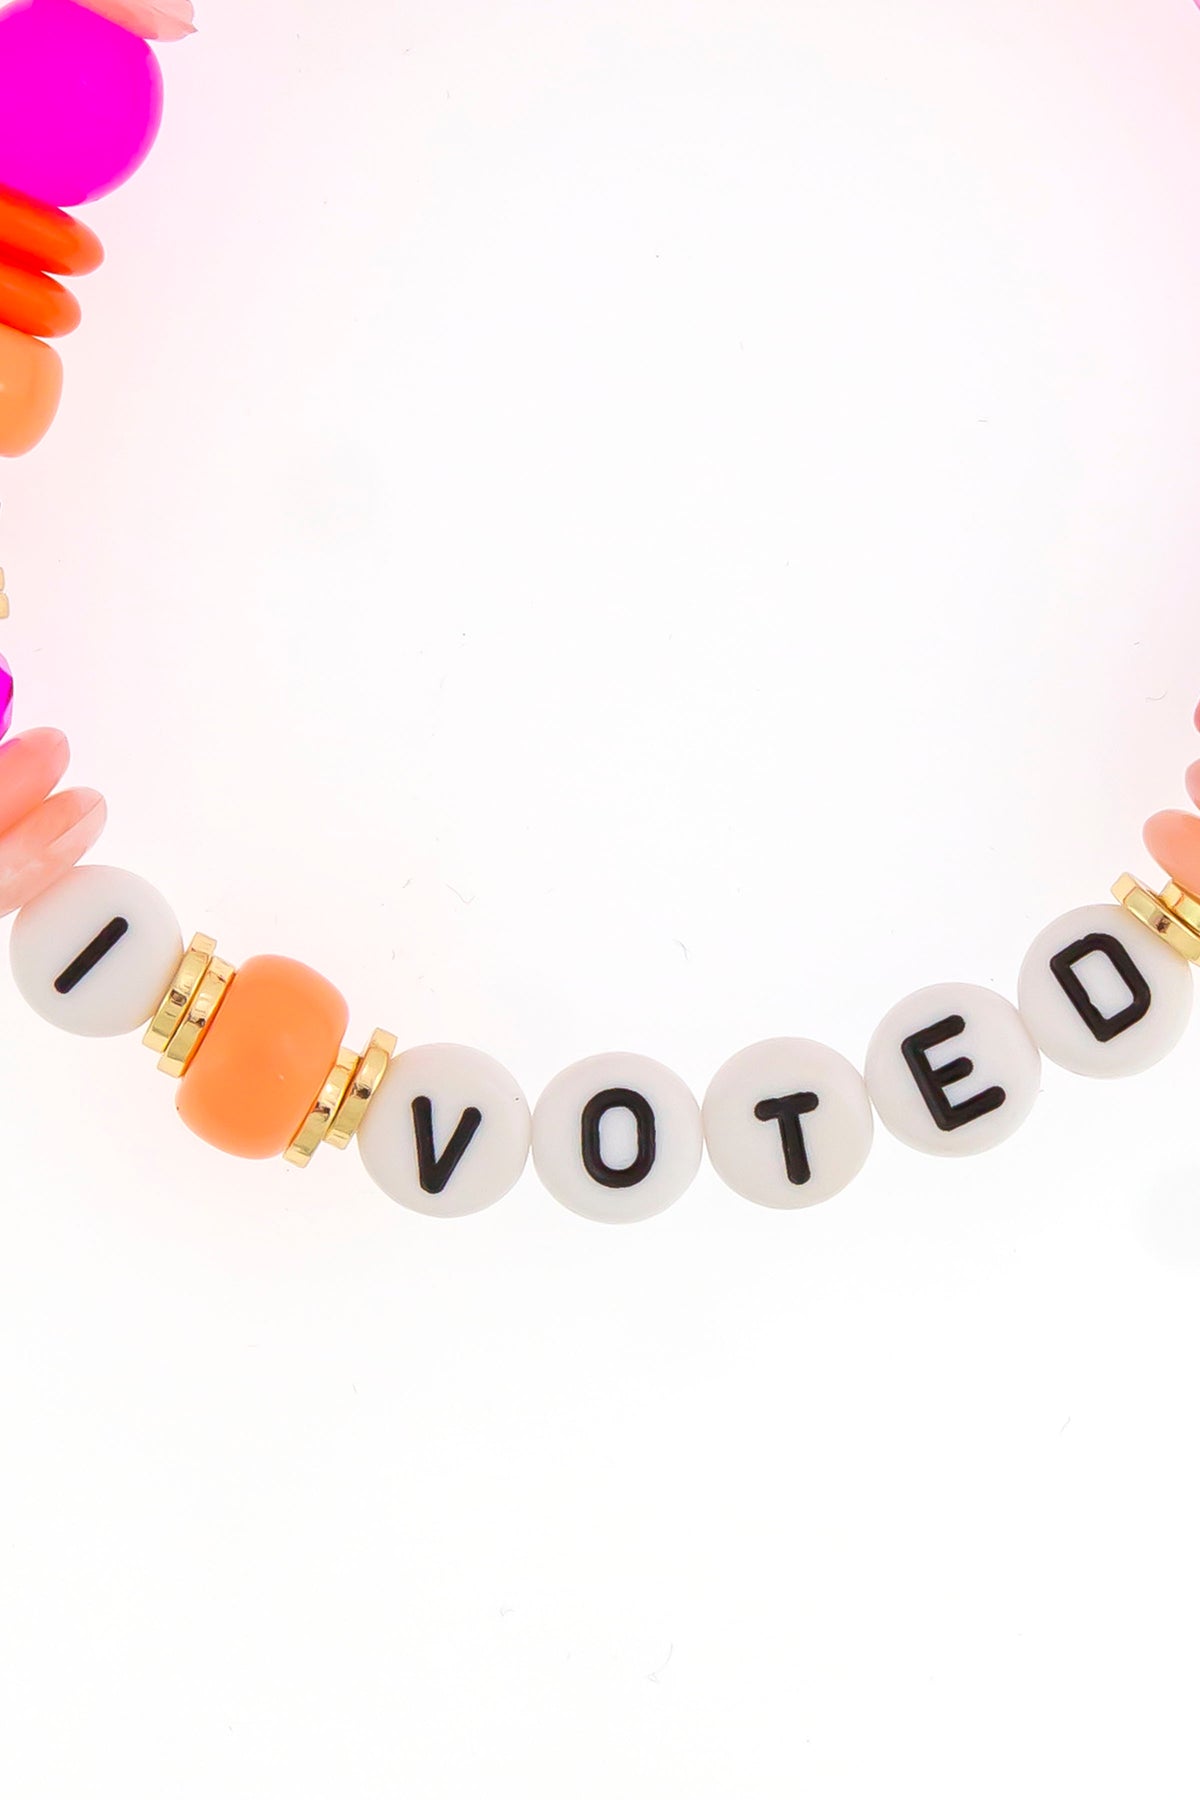 Dauplaise Jewelry - “I Voted” Bracelet in Fuchsia